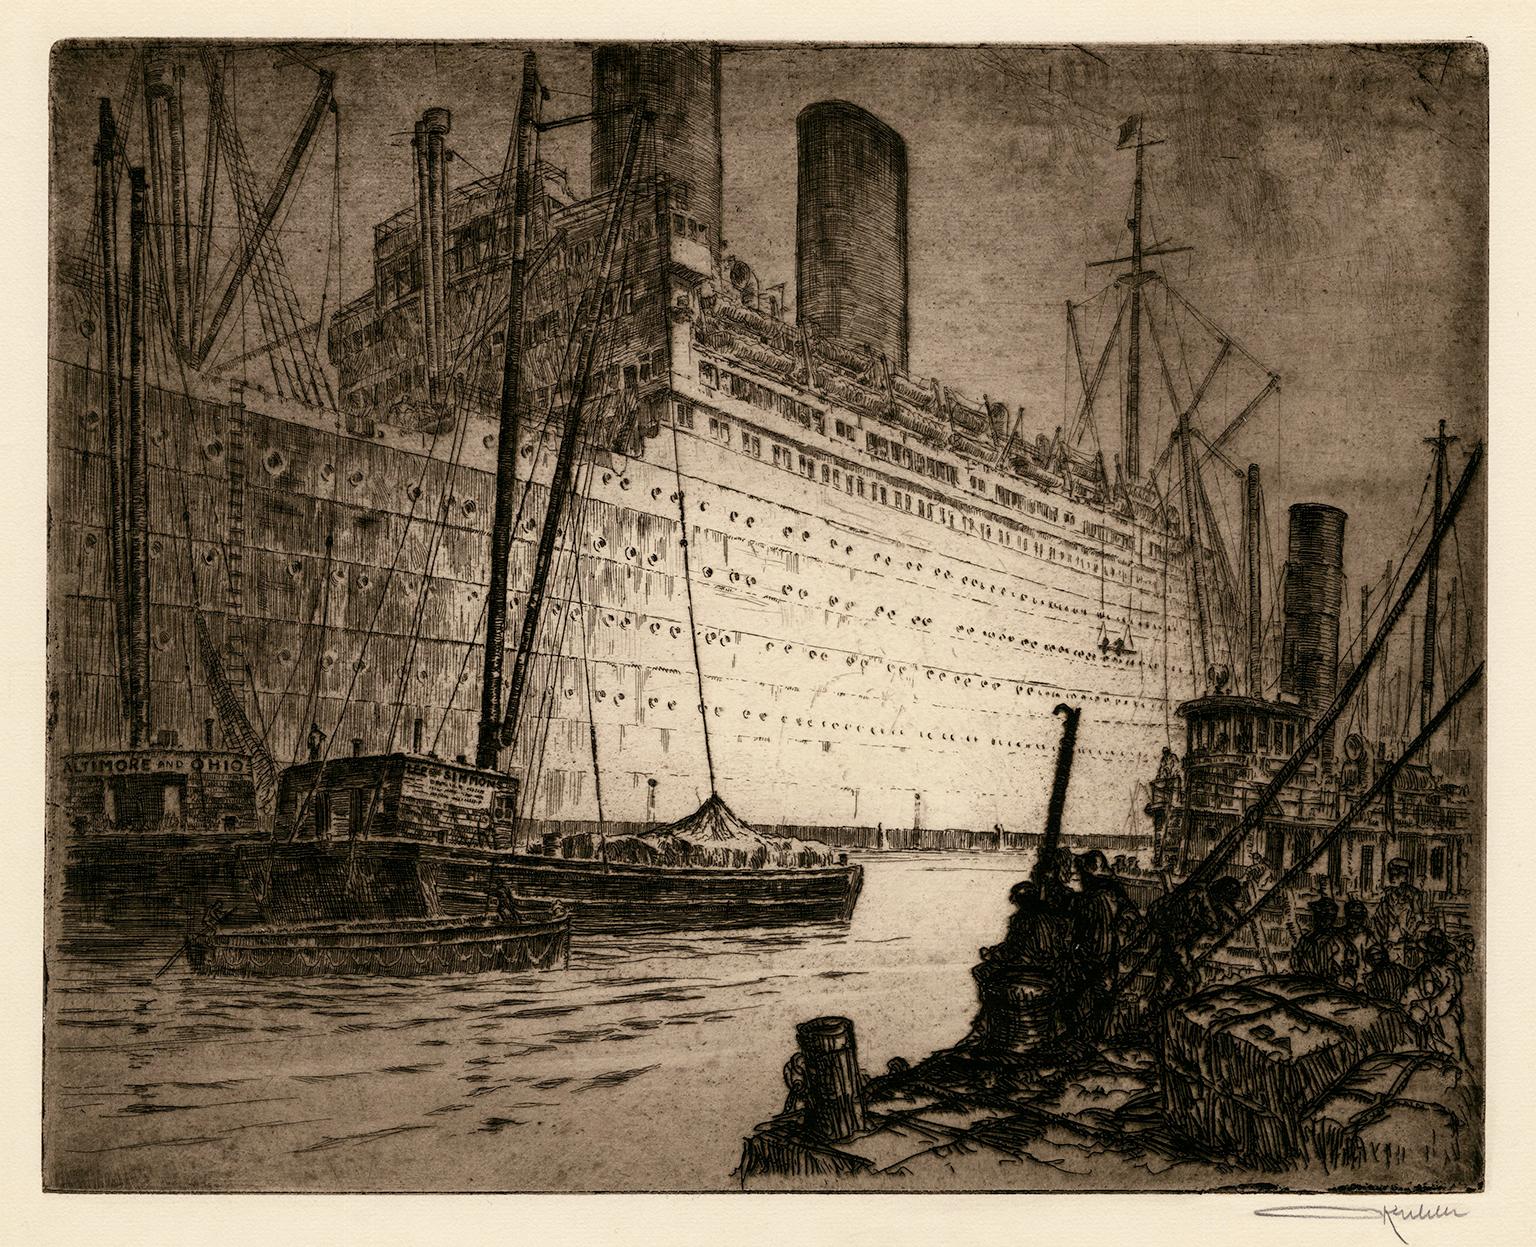 Otto Kuhler Figurative Print – Frachttransporter" - New Yorker Hafen in den 1930er Jahren